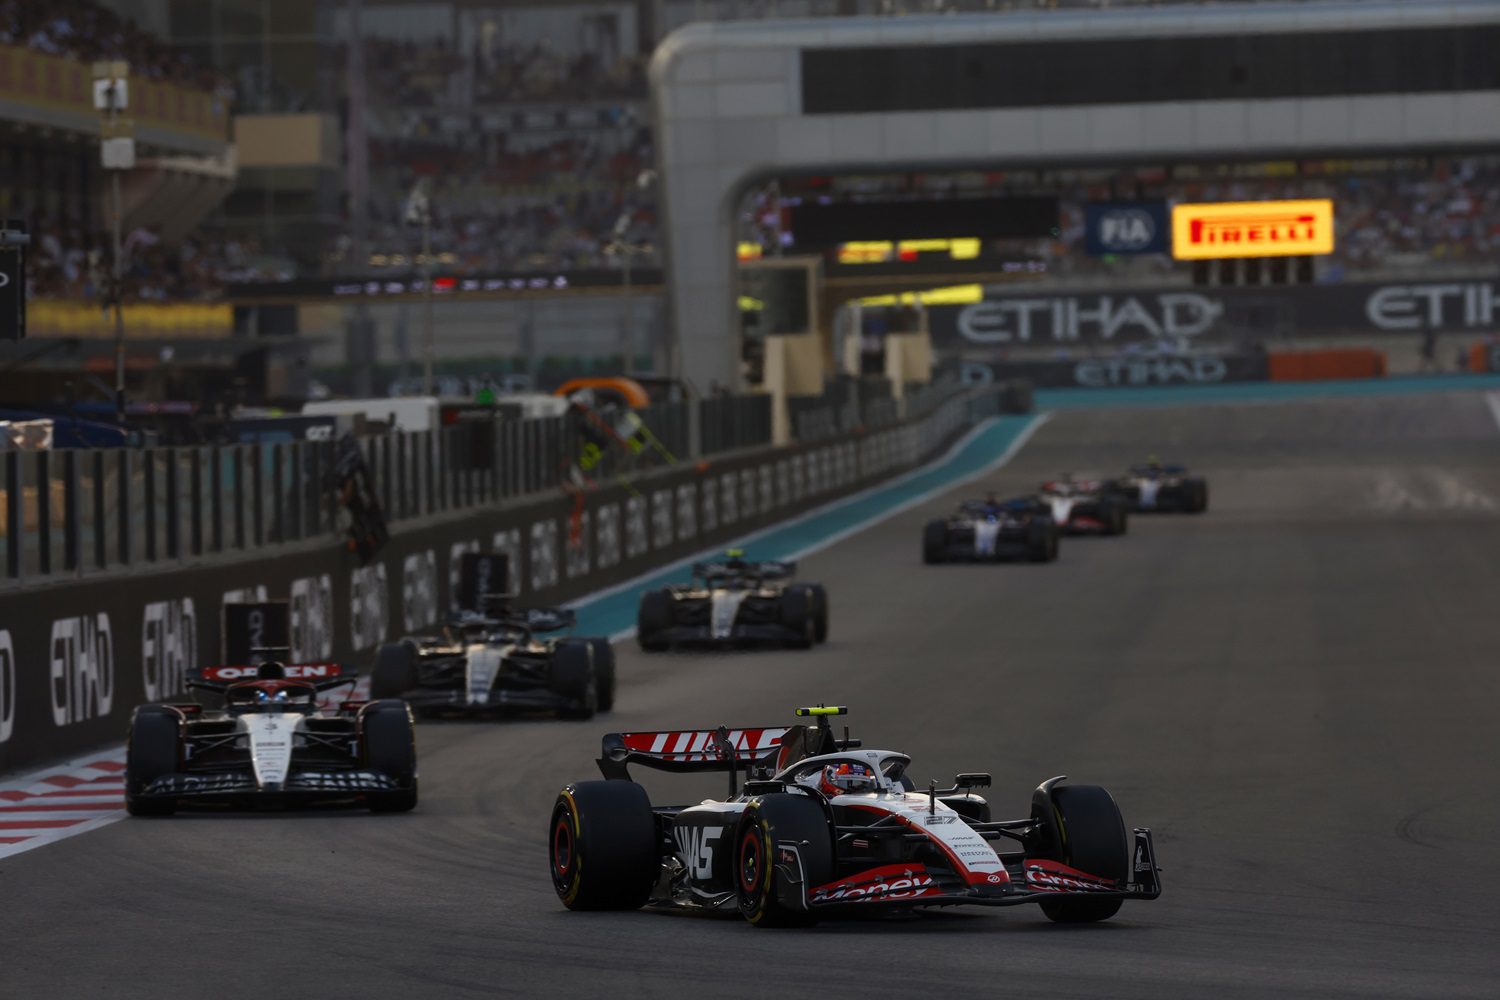 The longest season in F1 history kicks off in the region on Thursday